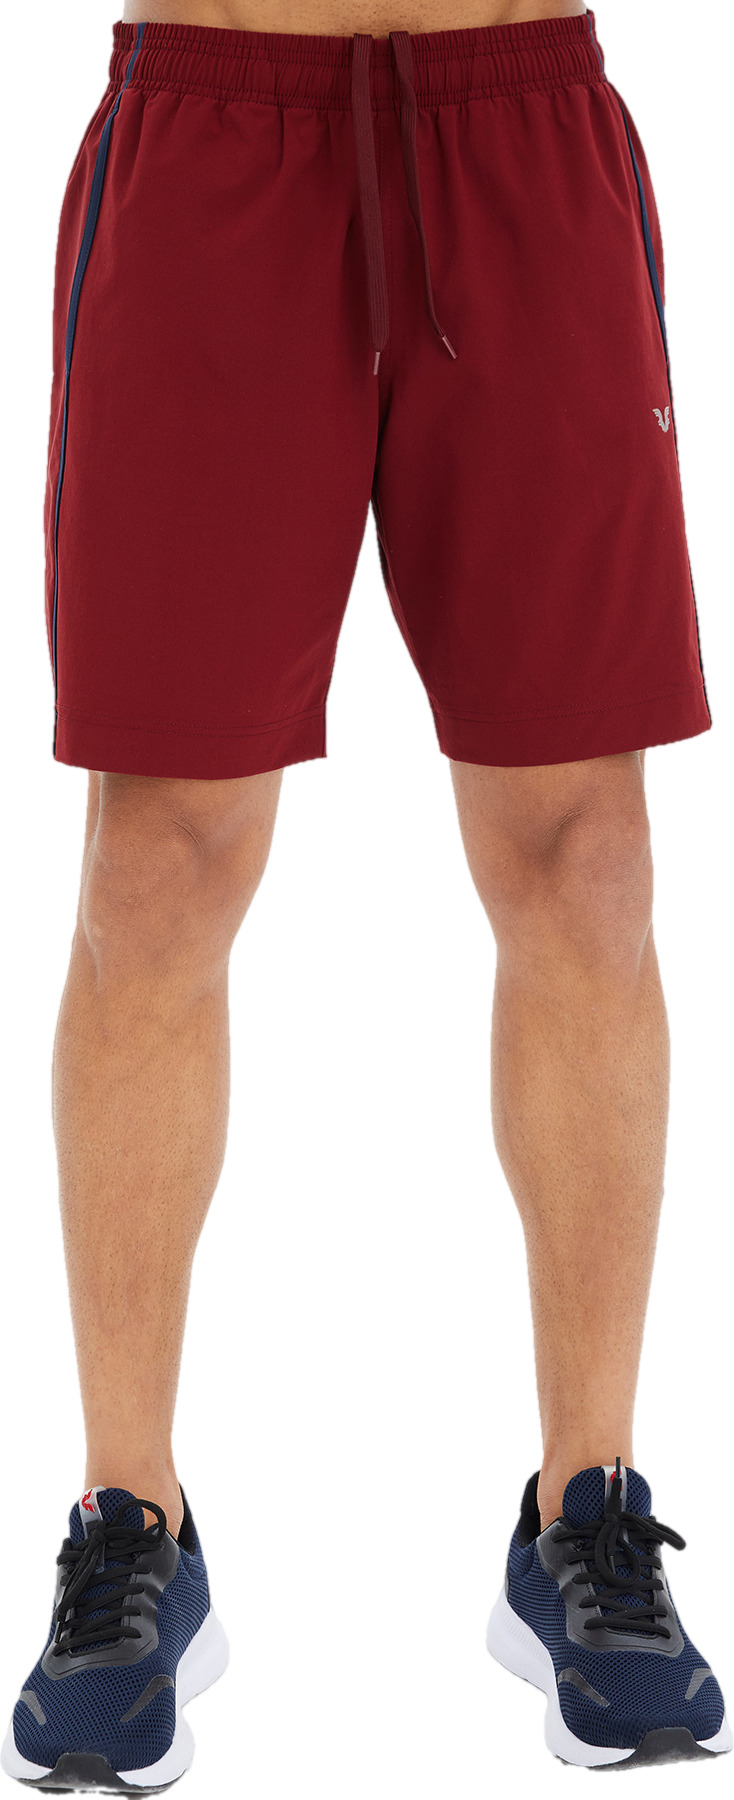 Шорты мужские Bilcee Men Woven Shorts красные XL